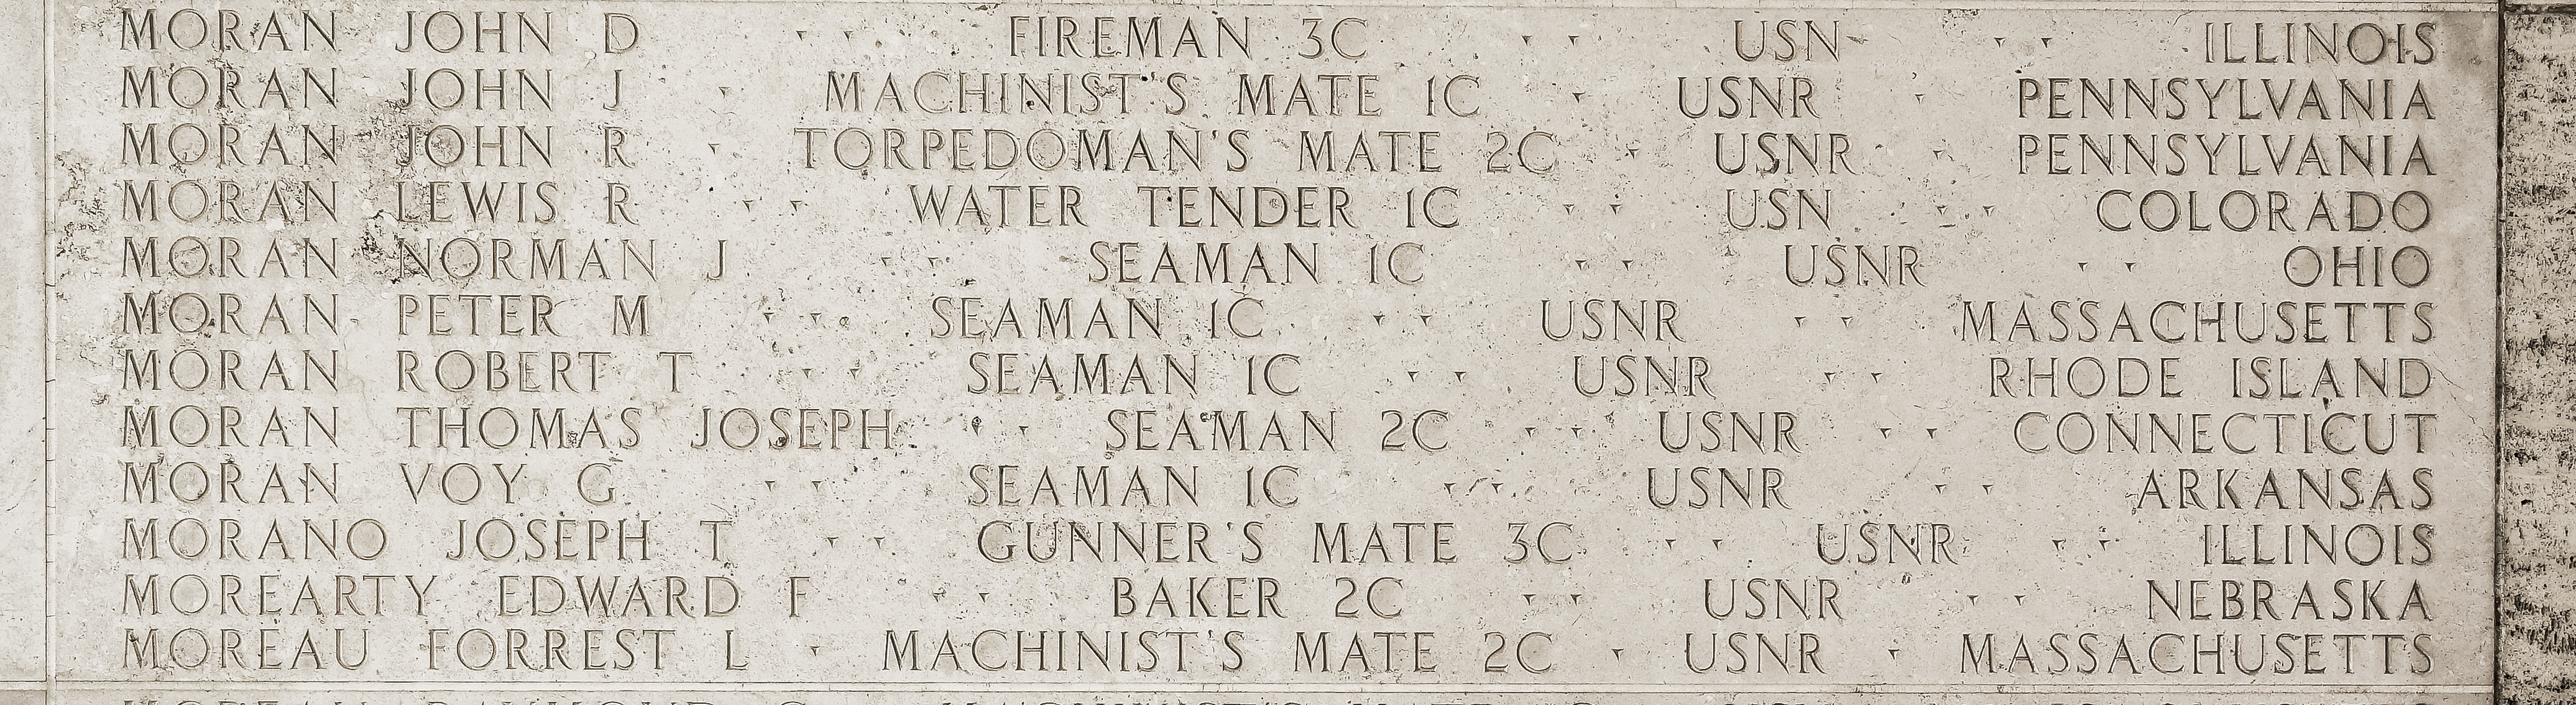 Peter M. Moran, Seaman First Class